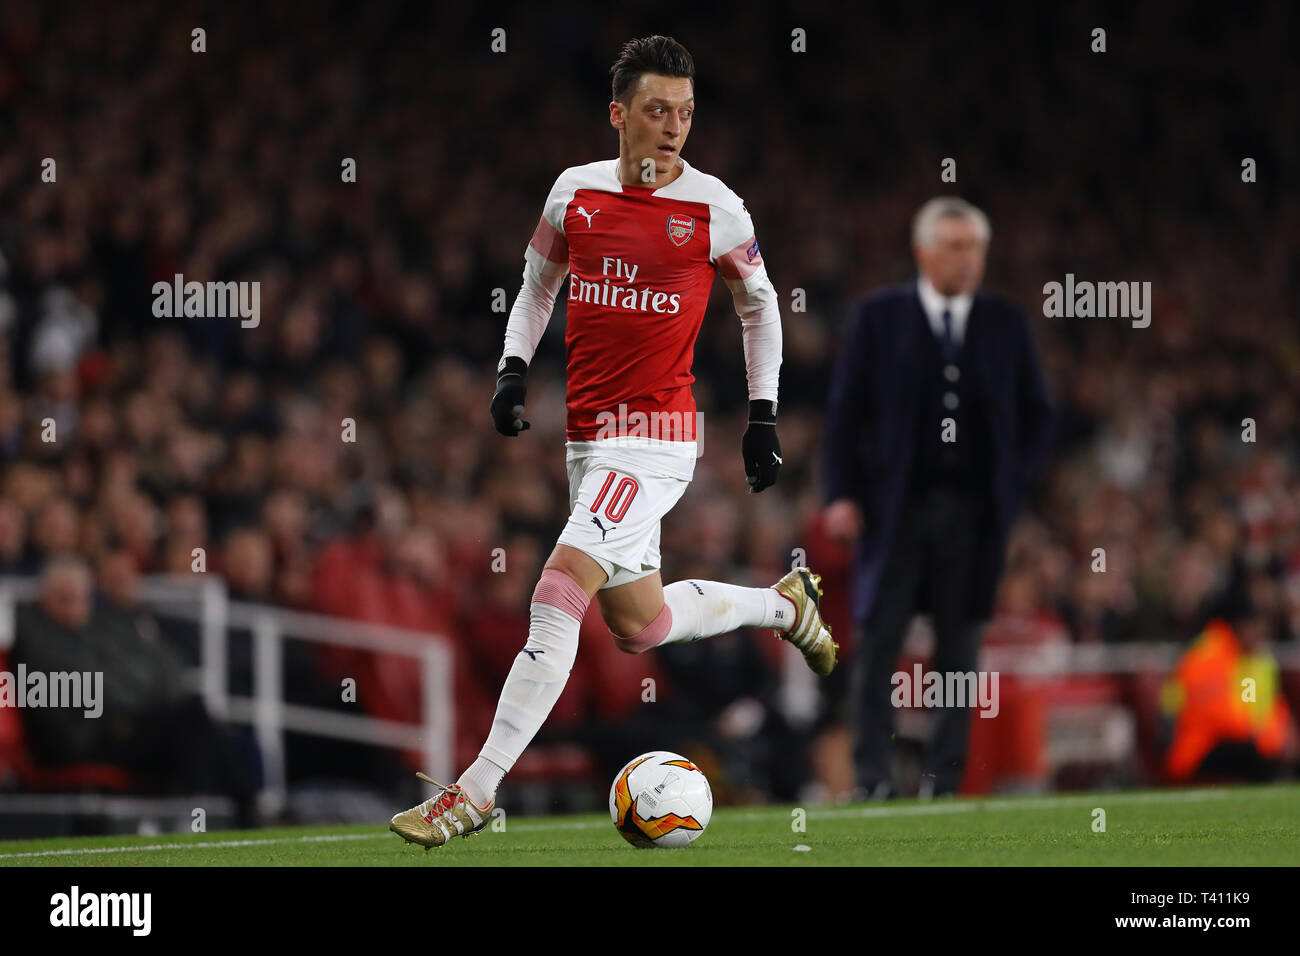 Mesut Ozil of Arsenal - Arsenal v Napoli, UEFA Europa League Quarter Final - 1st Leg, Emirates Stadium, London - 11th April 2019 Stock Photo